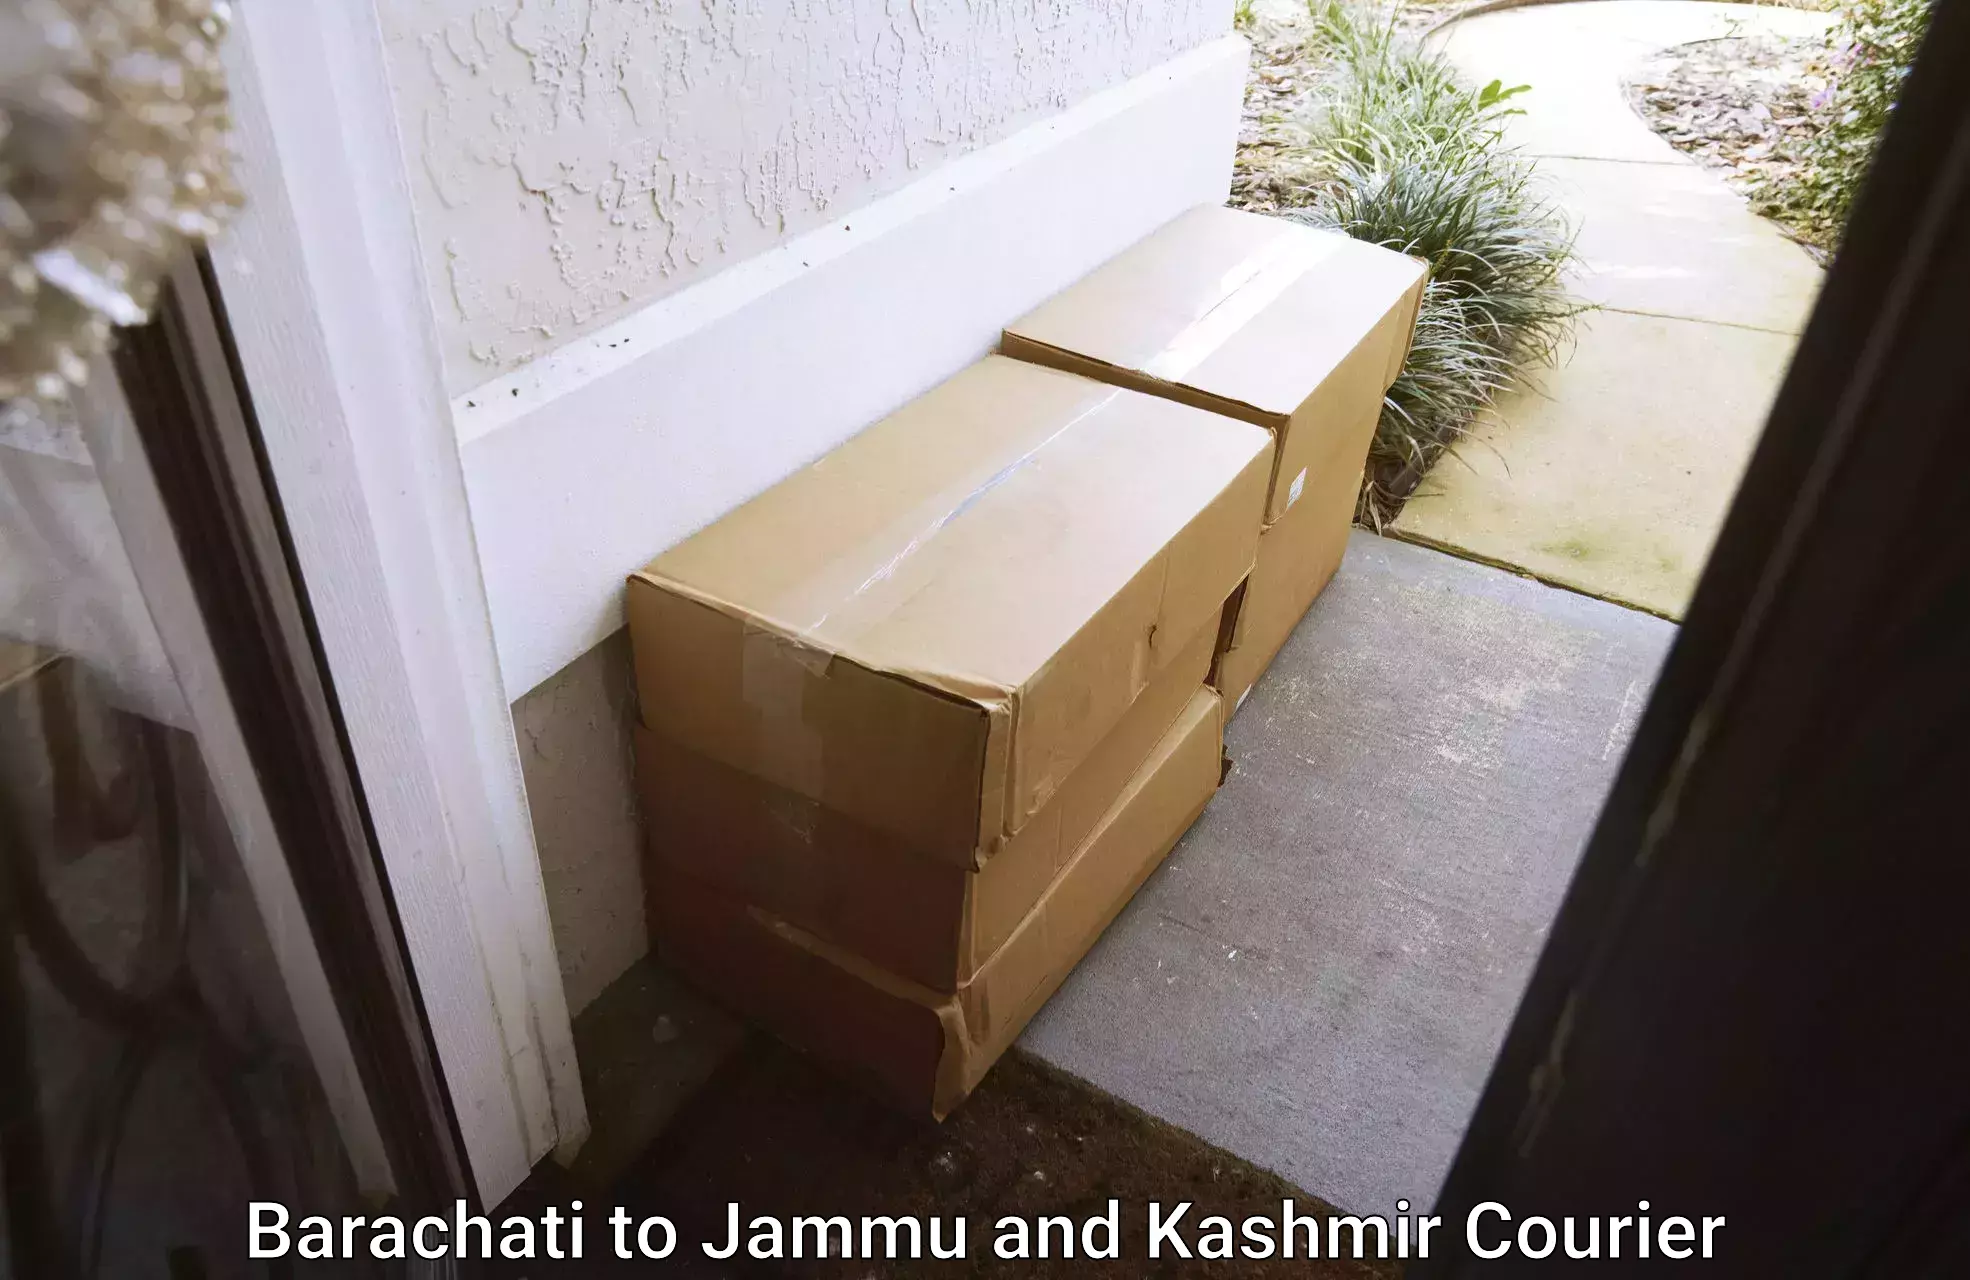 Full-service movers Barachati to Jammu and Kashmir